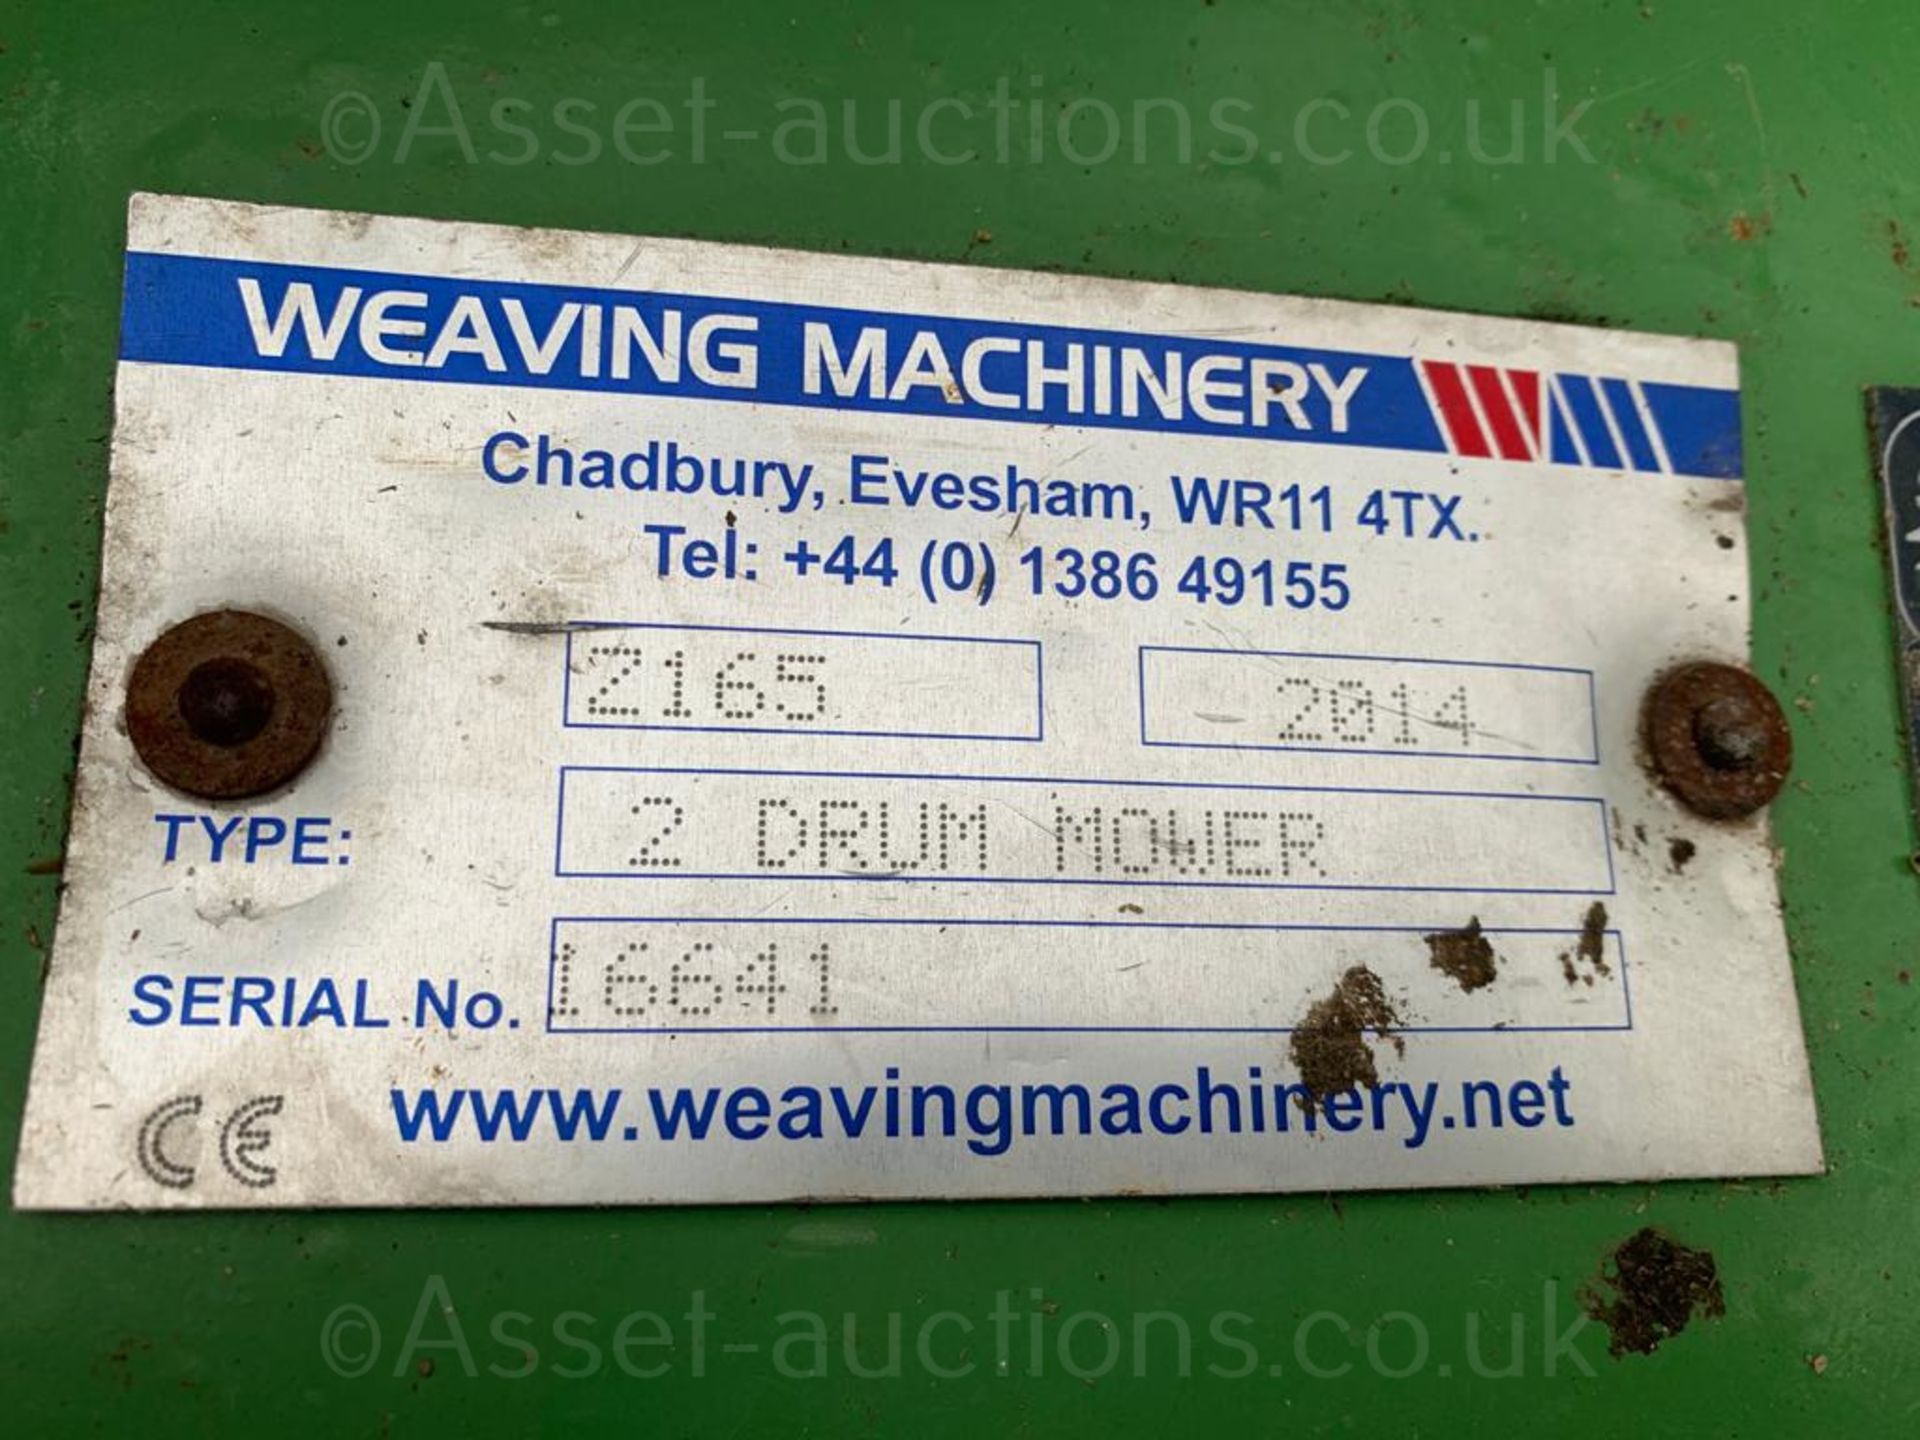 WEAVING MACHINERY 2 DRUM ROTARY MOWER, YEAR 2014, MODEL Z165 - 5'6" CUT WORKING WIDTH *PLUS VAT* - Image 6 of 9